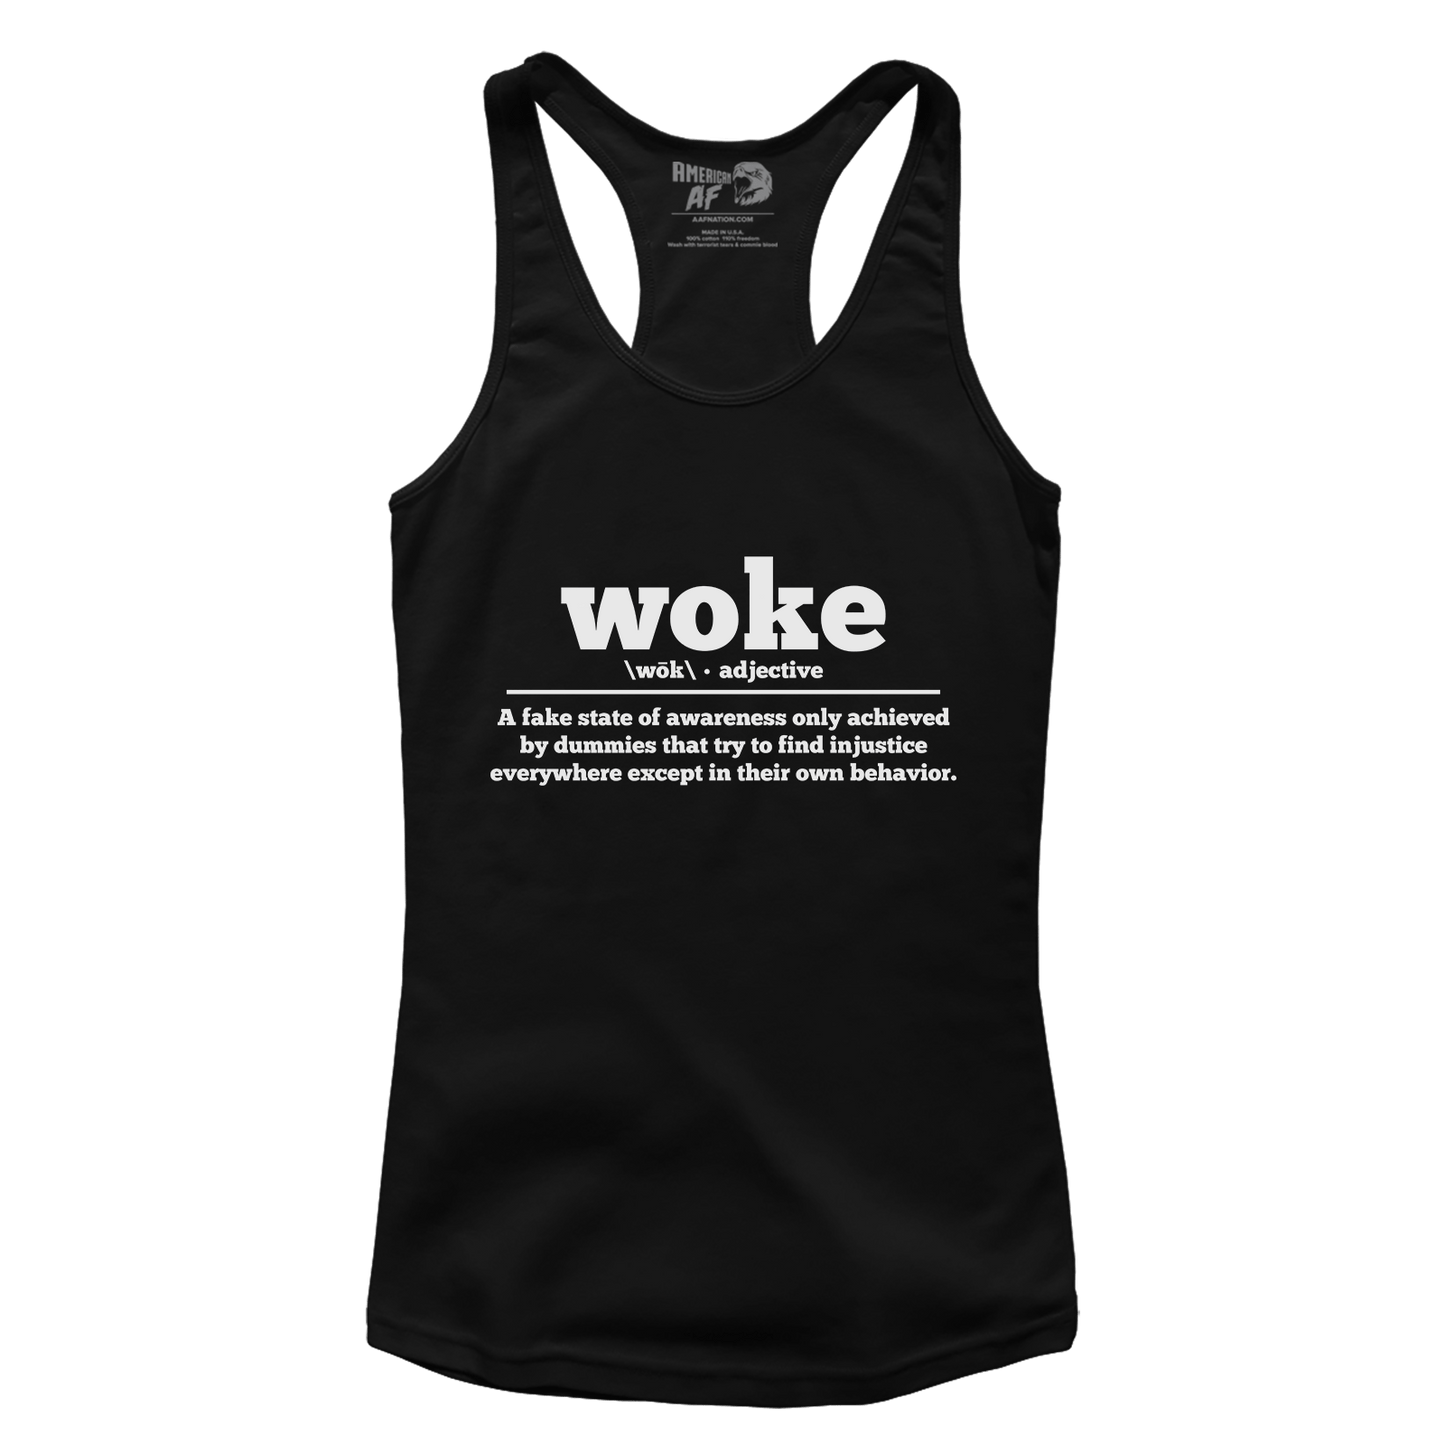 T-shirt Woke (Ladies)